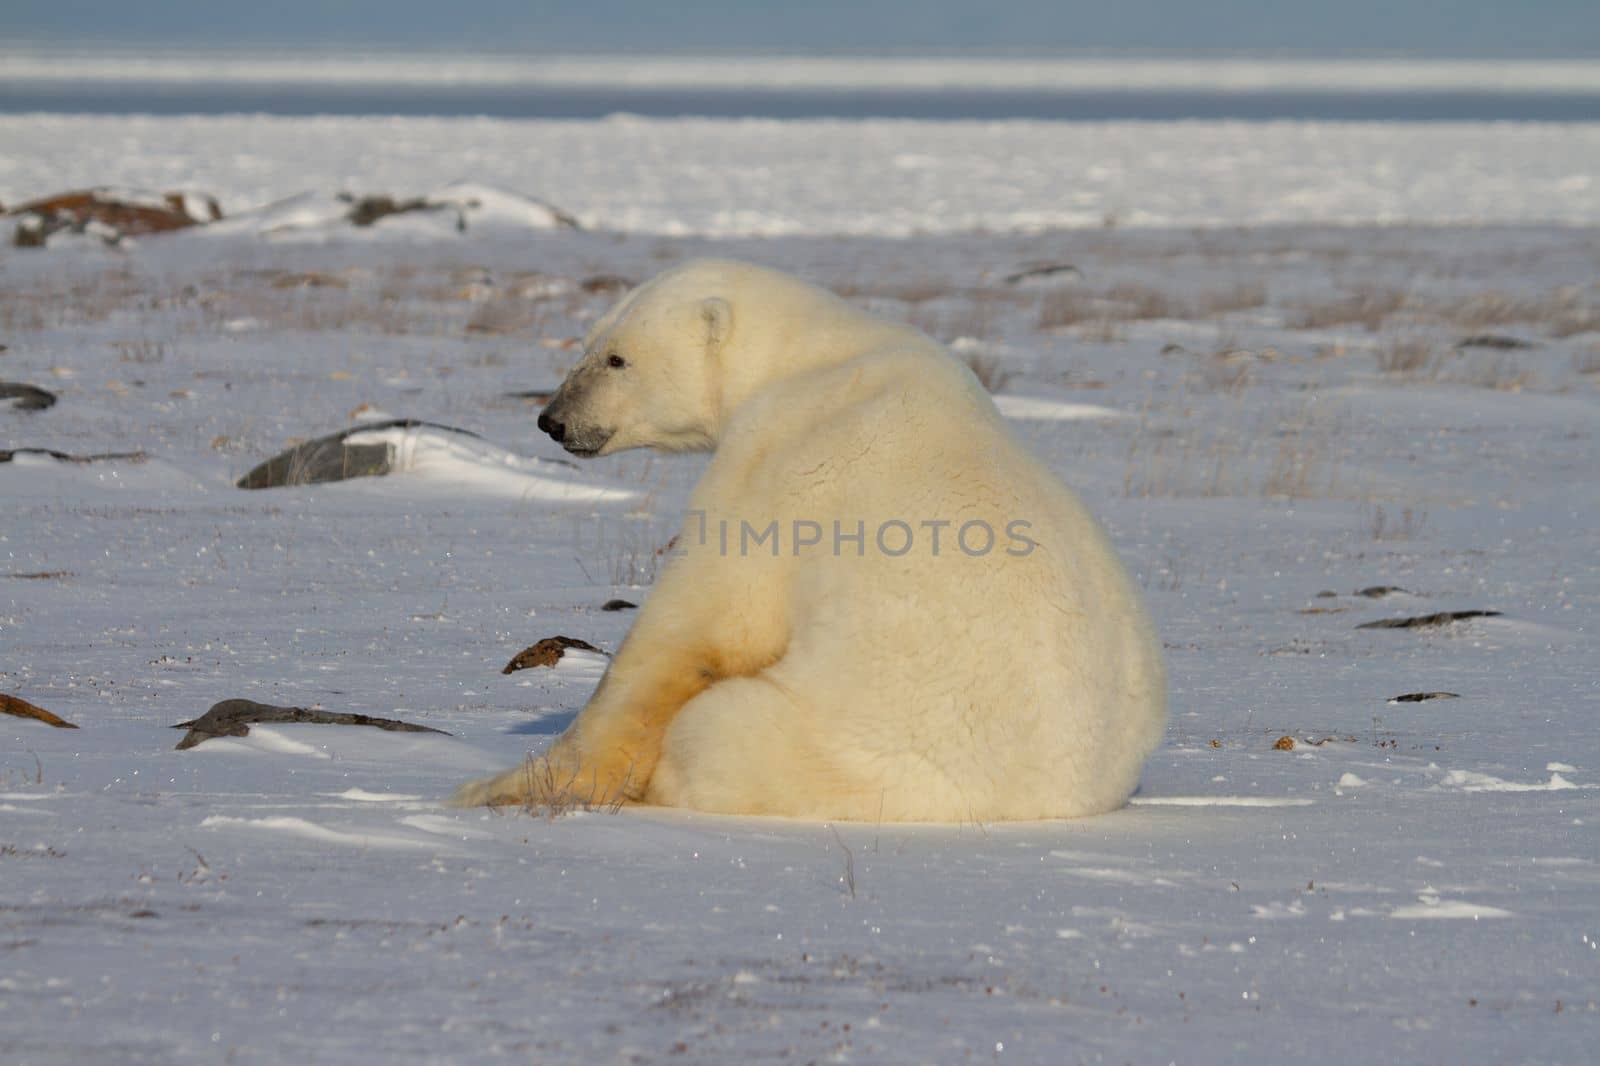 A polar bear, Ursus maritumus, sitting on snow among rocks and staring ahead, near Churchill, Manitoba by Granchinho